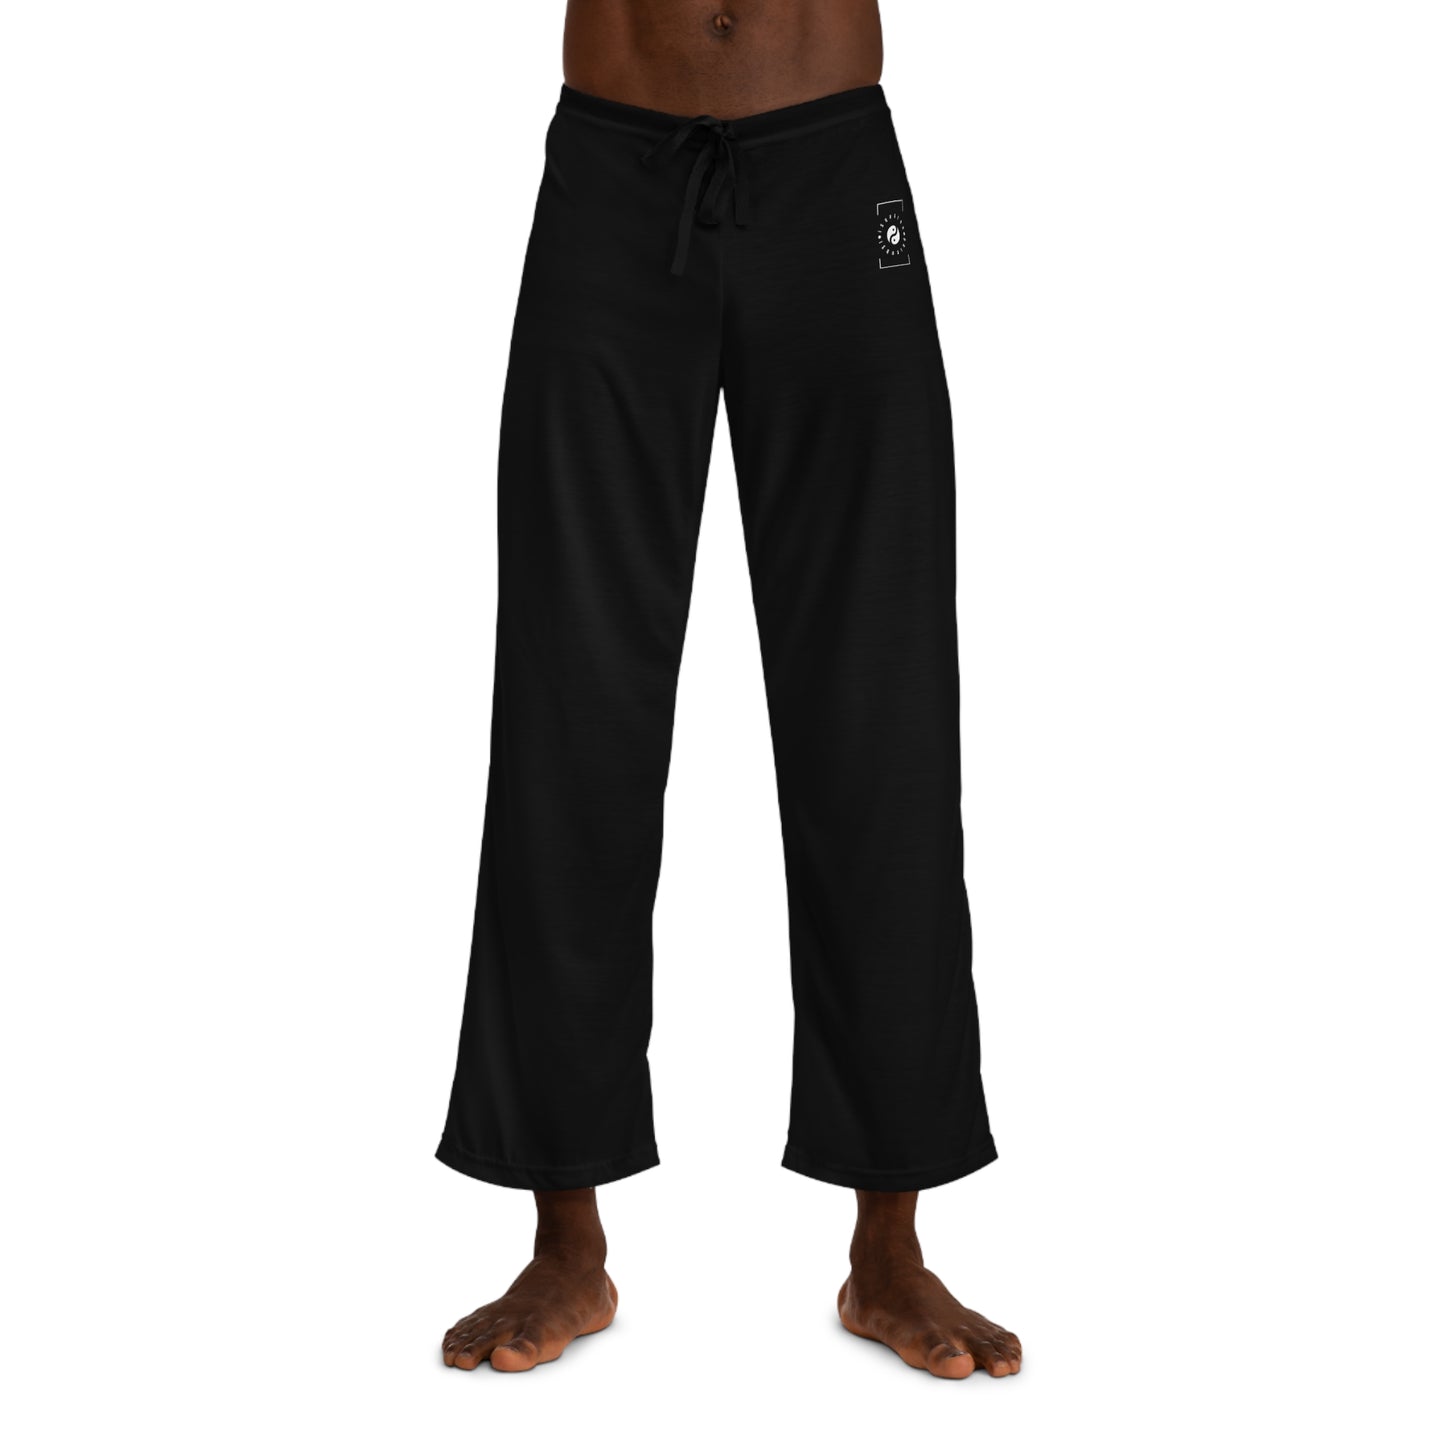 Pure Black - men's Lounge Pants